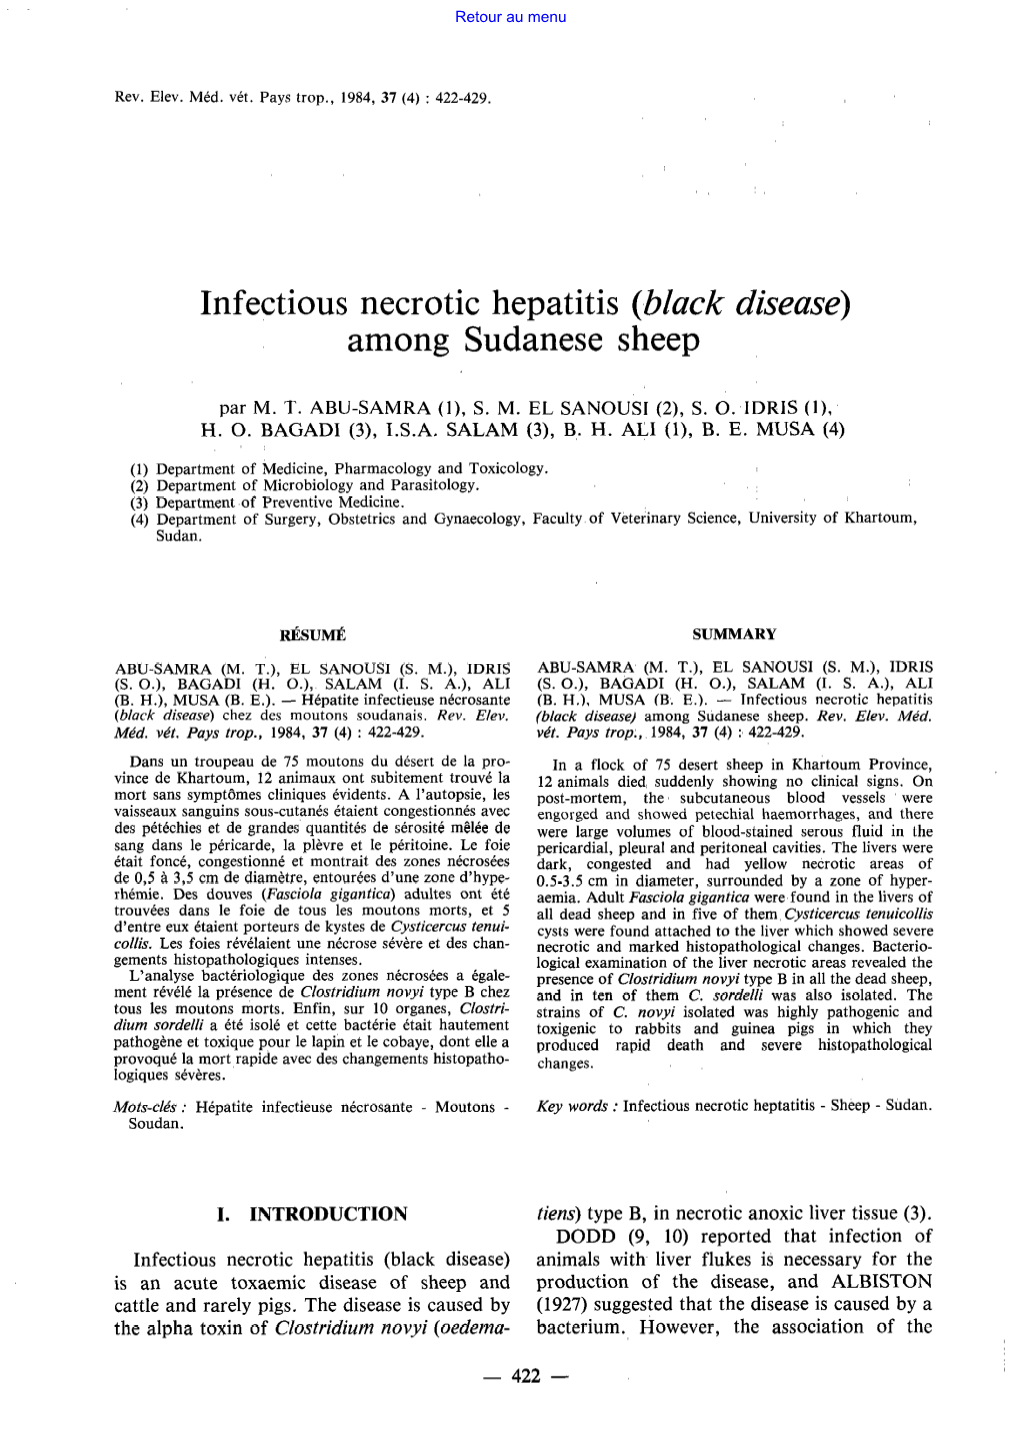 Infectious Necrotic Hepatitis (Black Diseuse) Among Sudanese Sheep